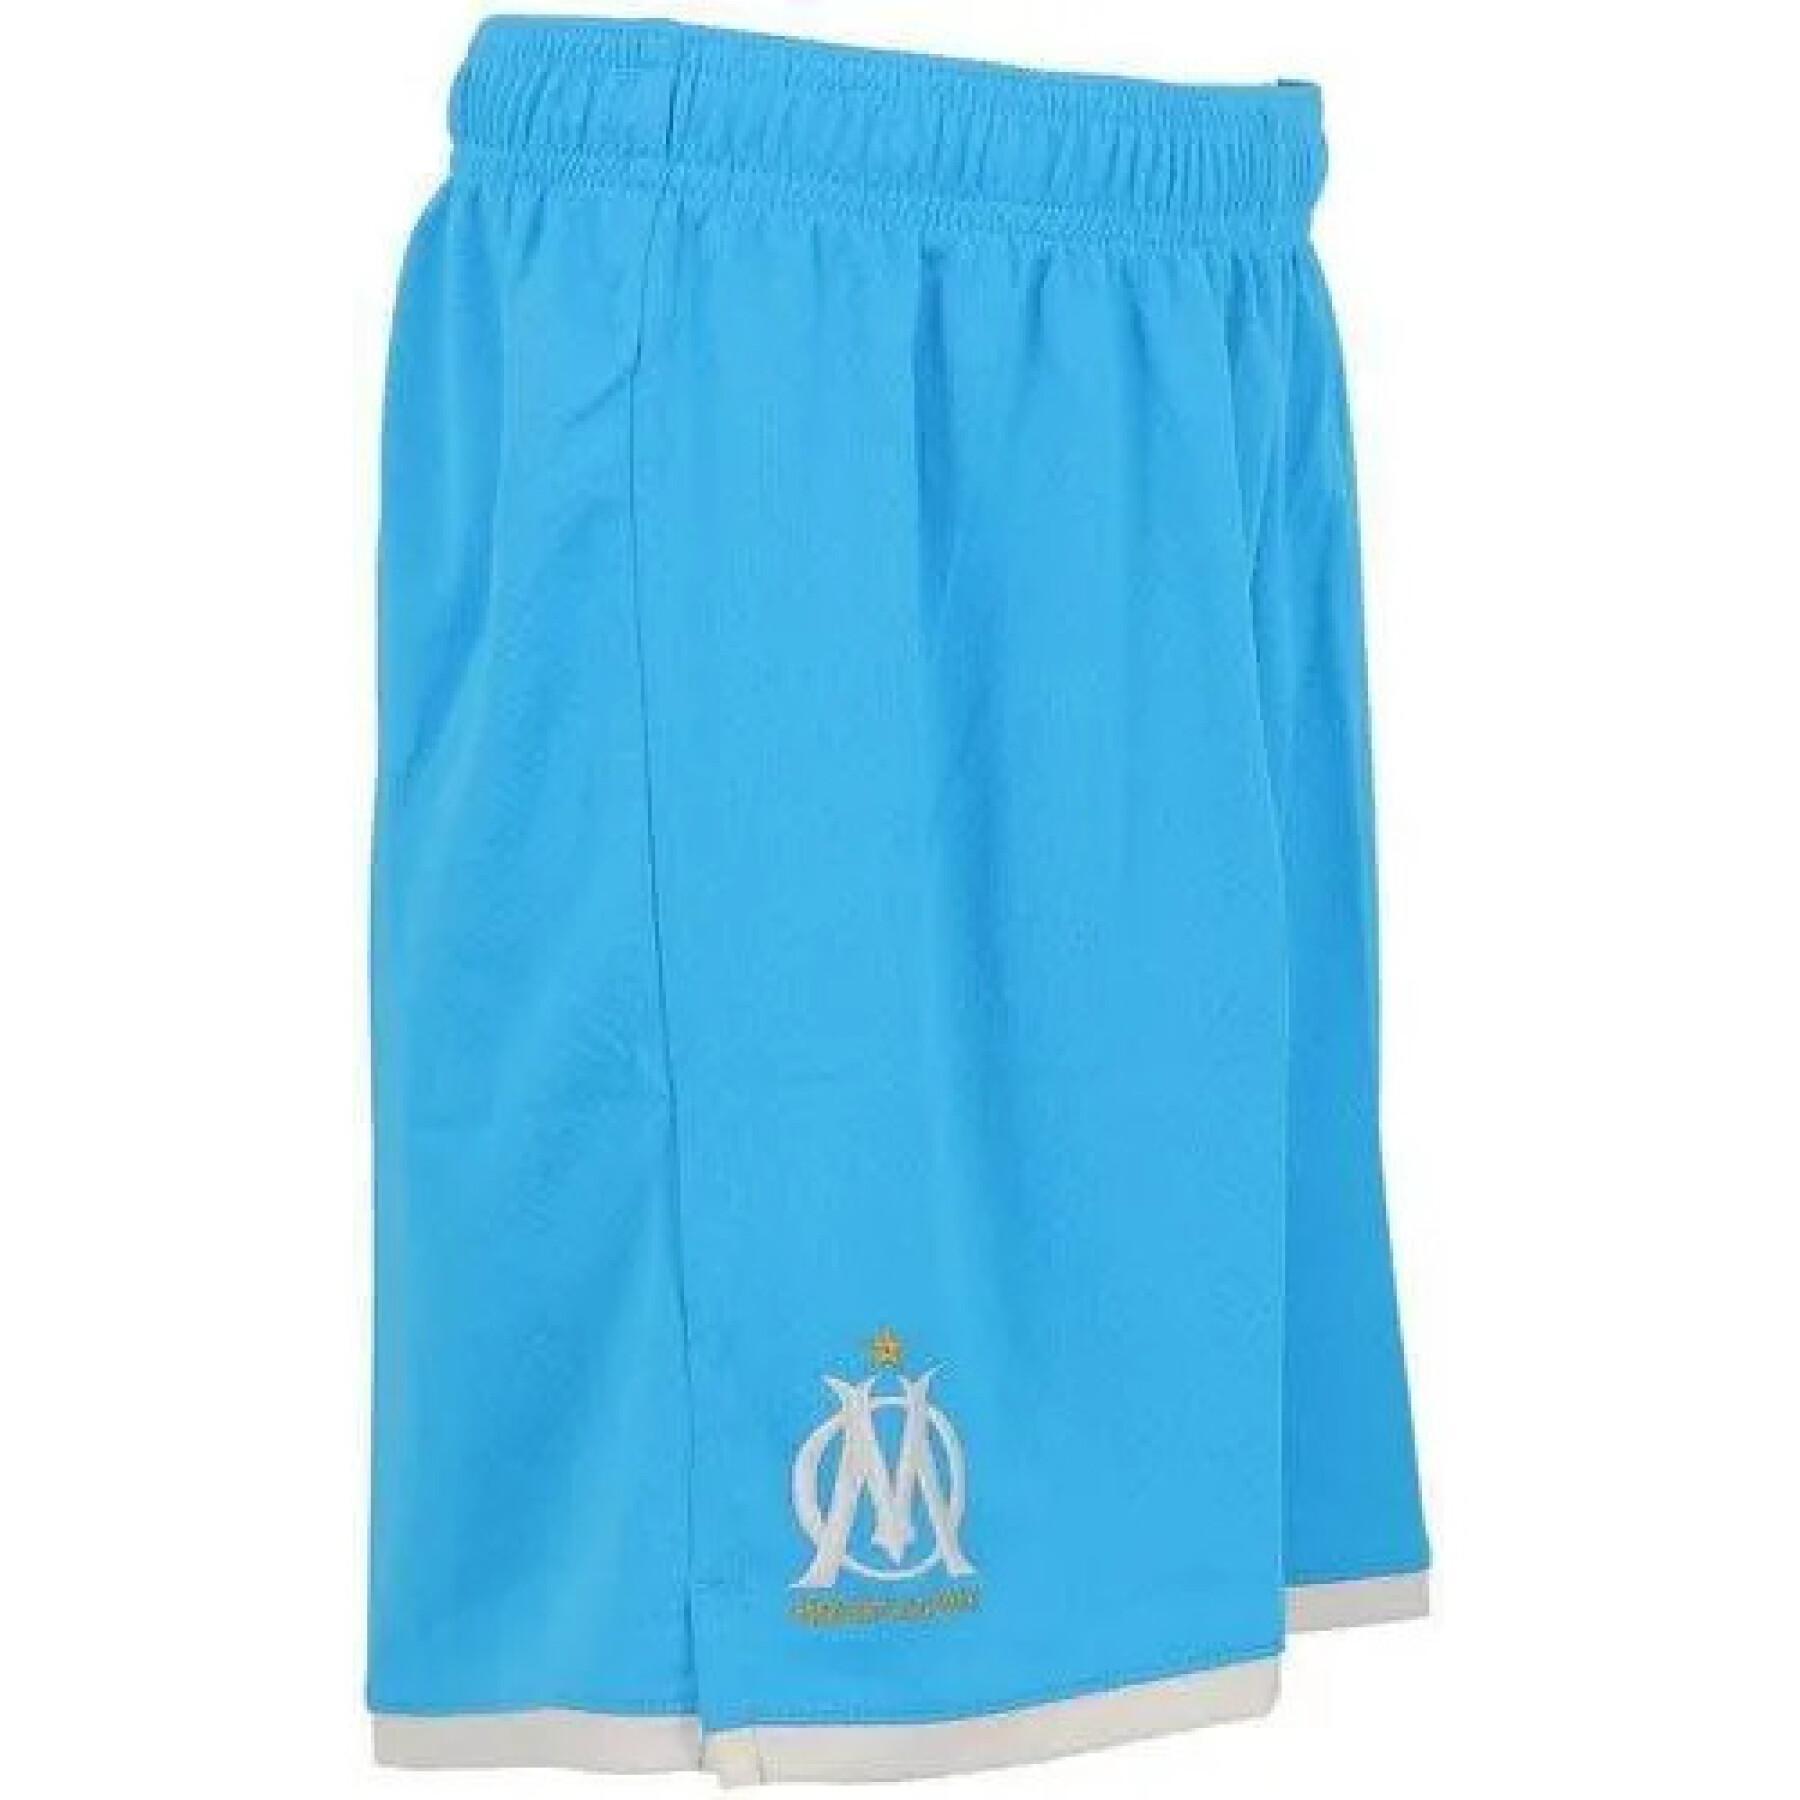 Children's outdoor shorts OM 2019/20